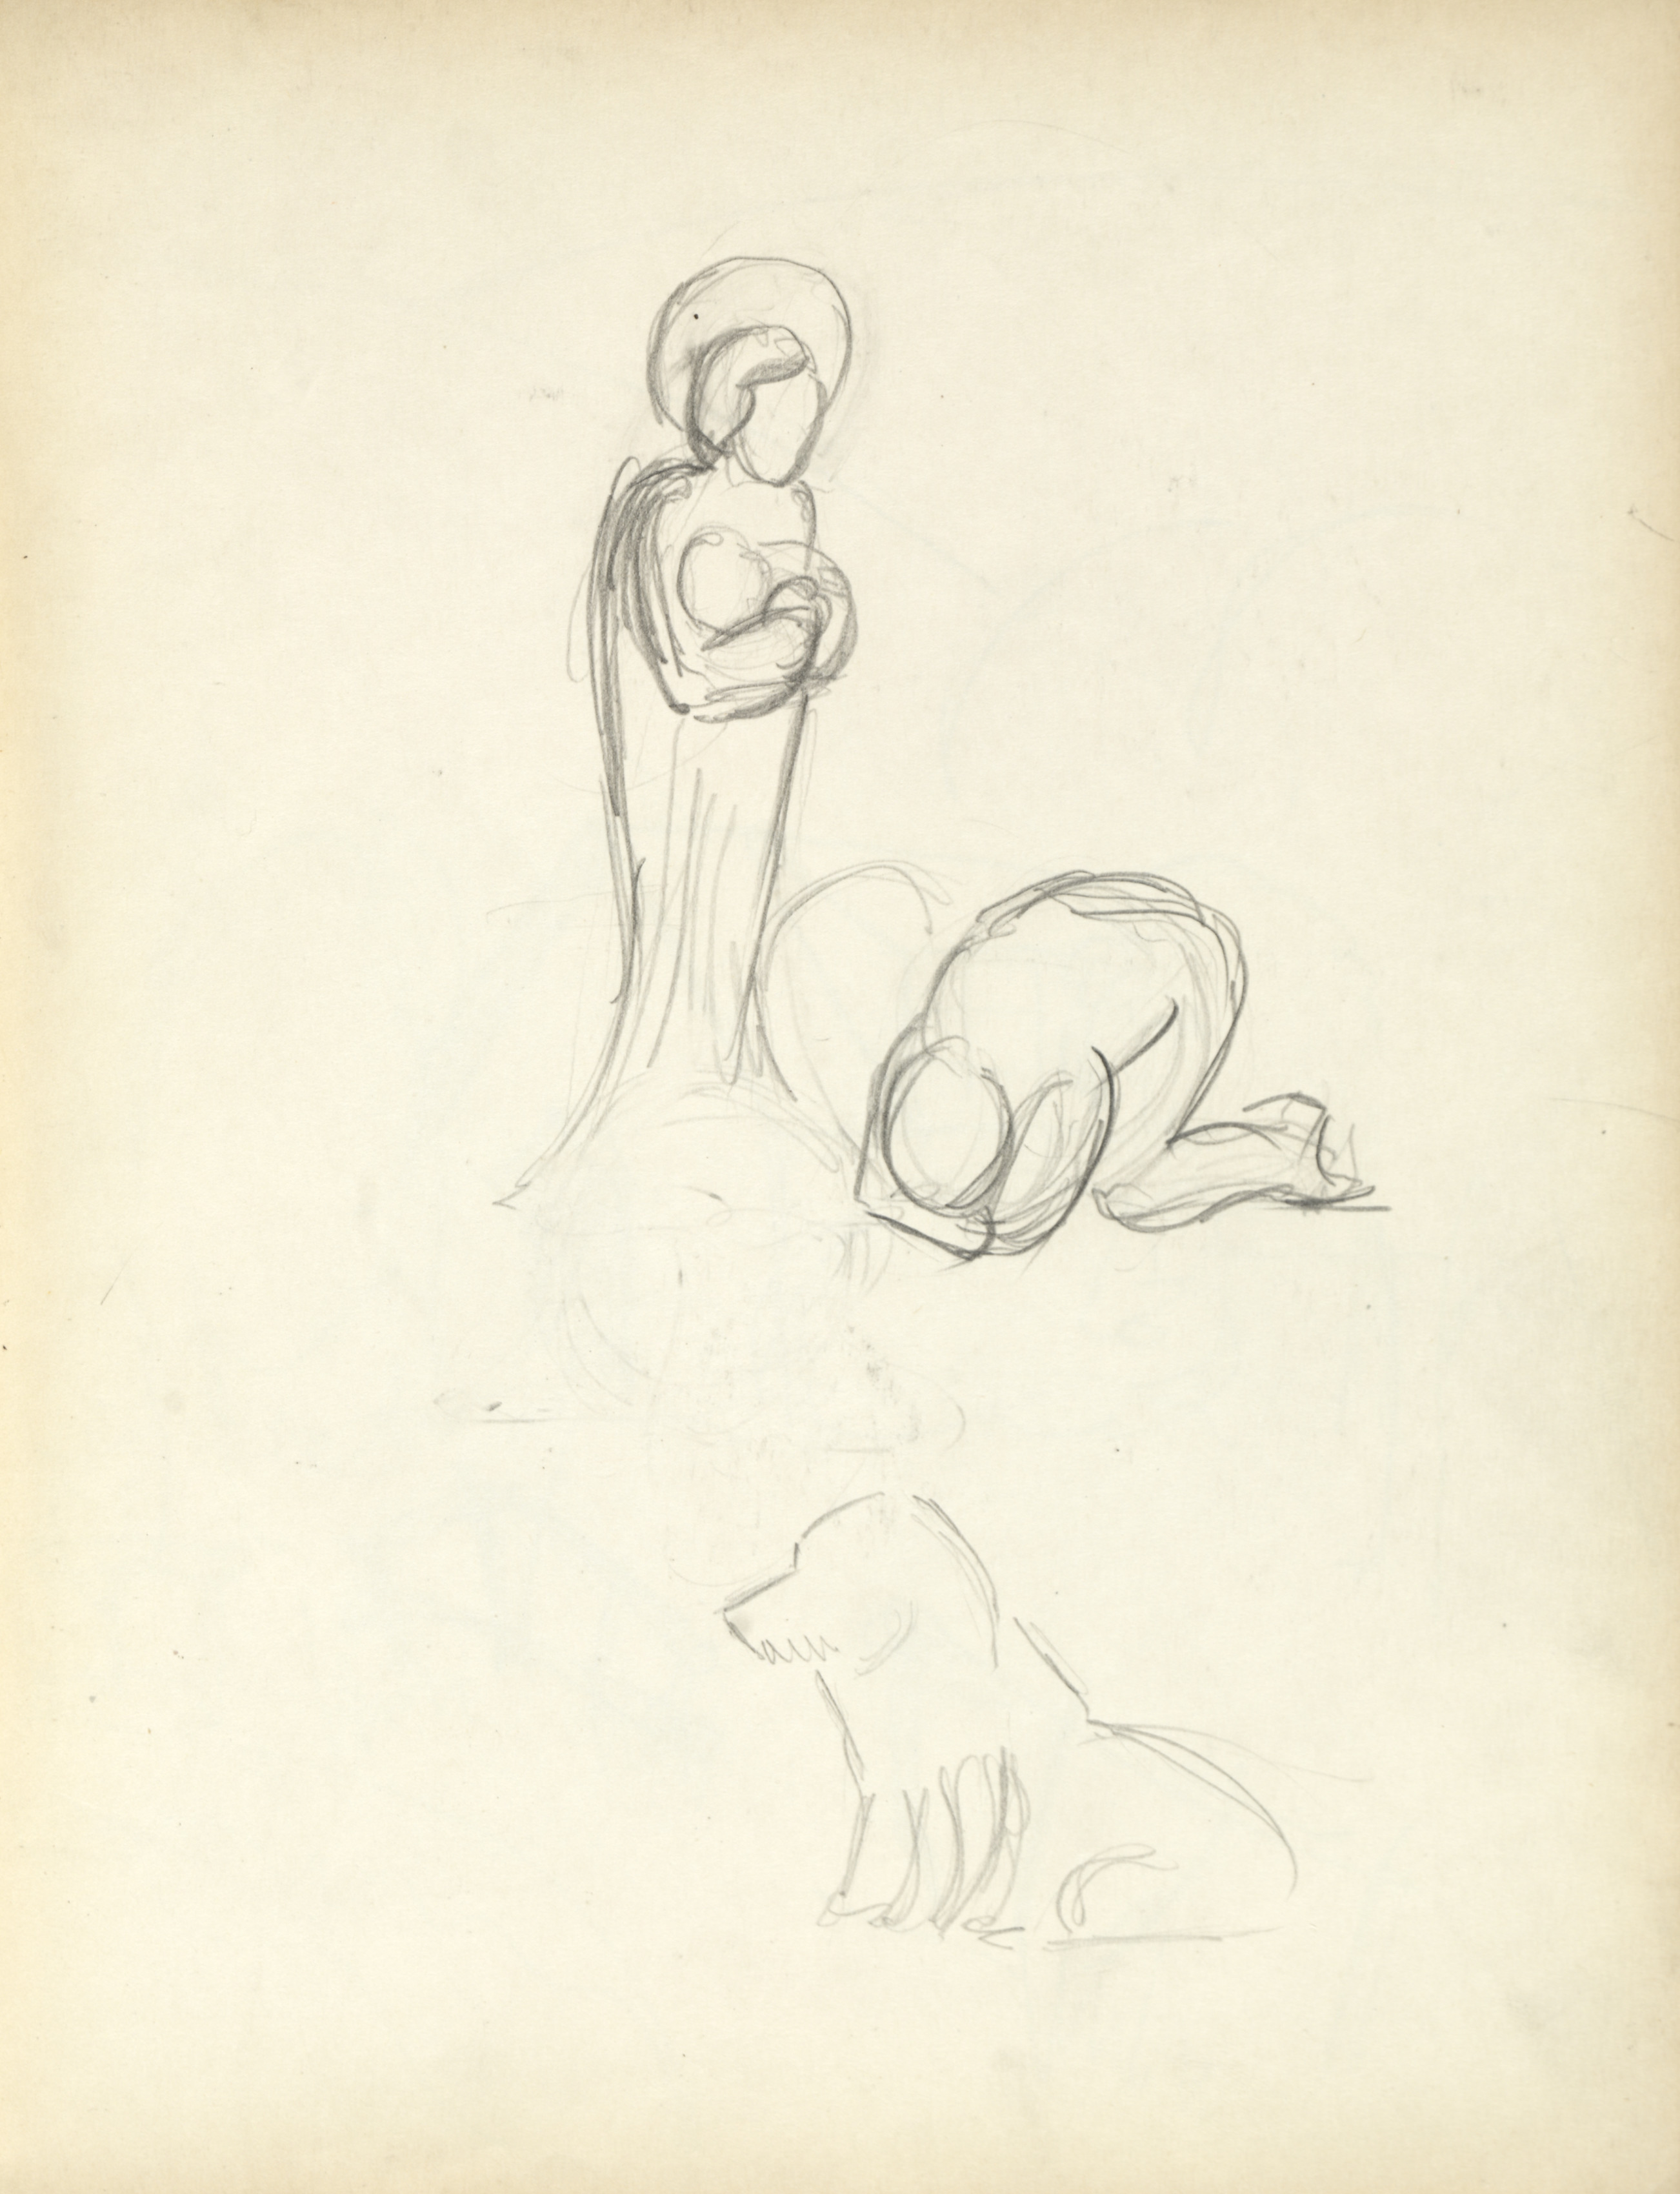 Sketchbook #1: Virgin and child (page 133)